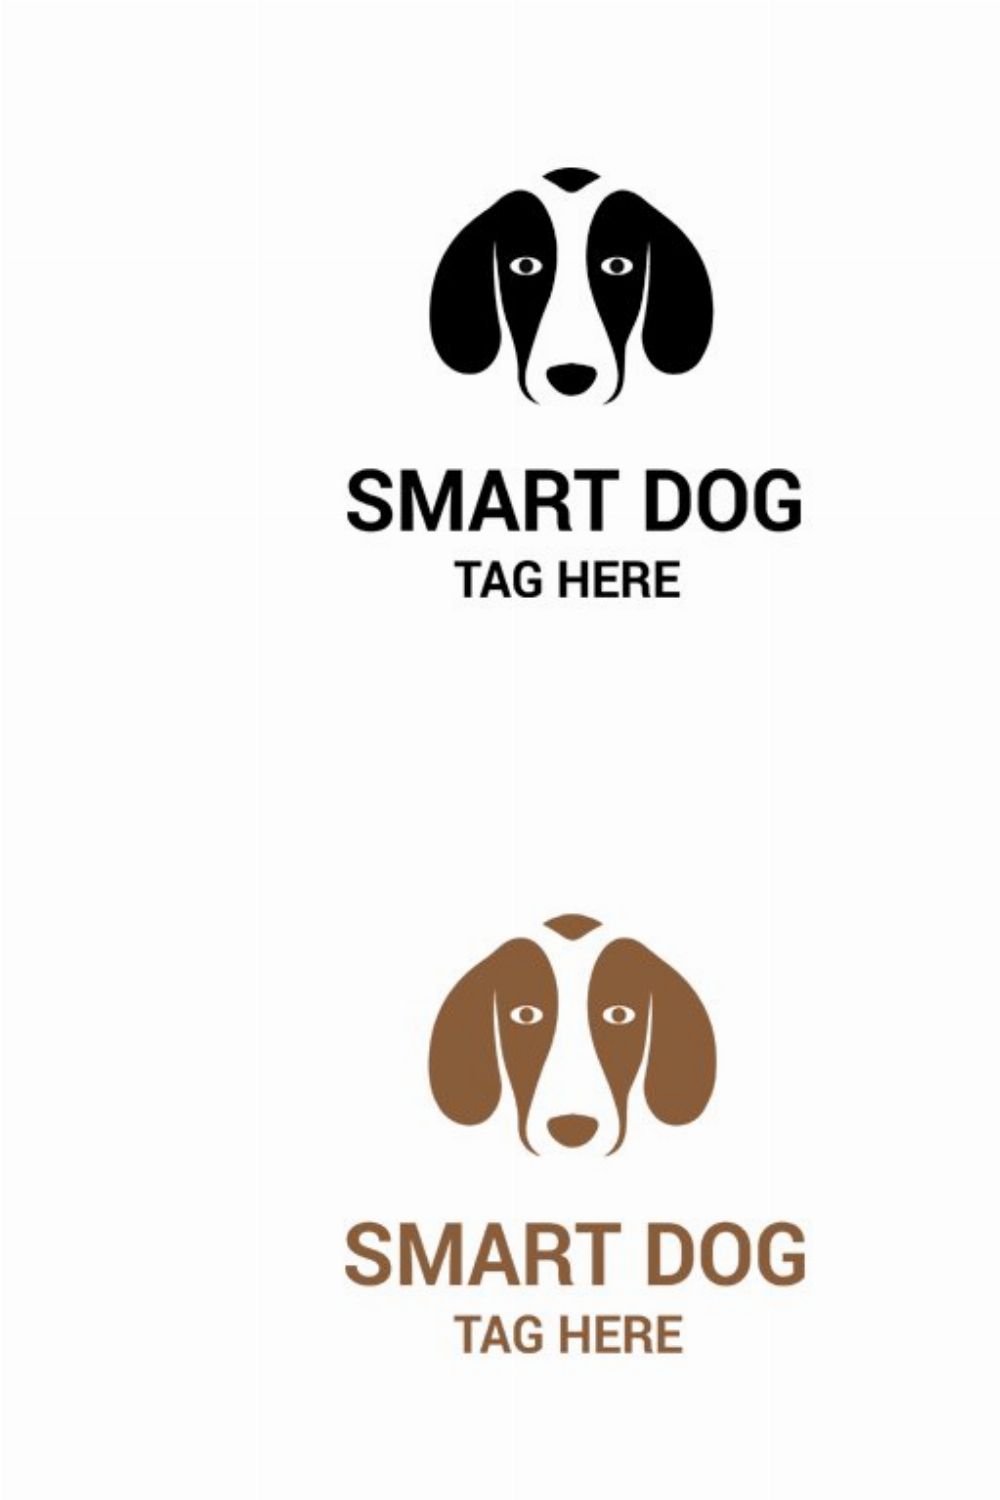 Smart Dog Logo pinterest preview image.